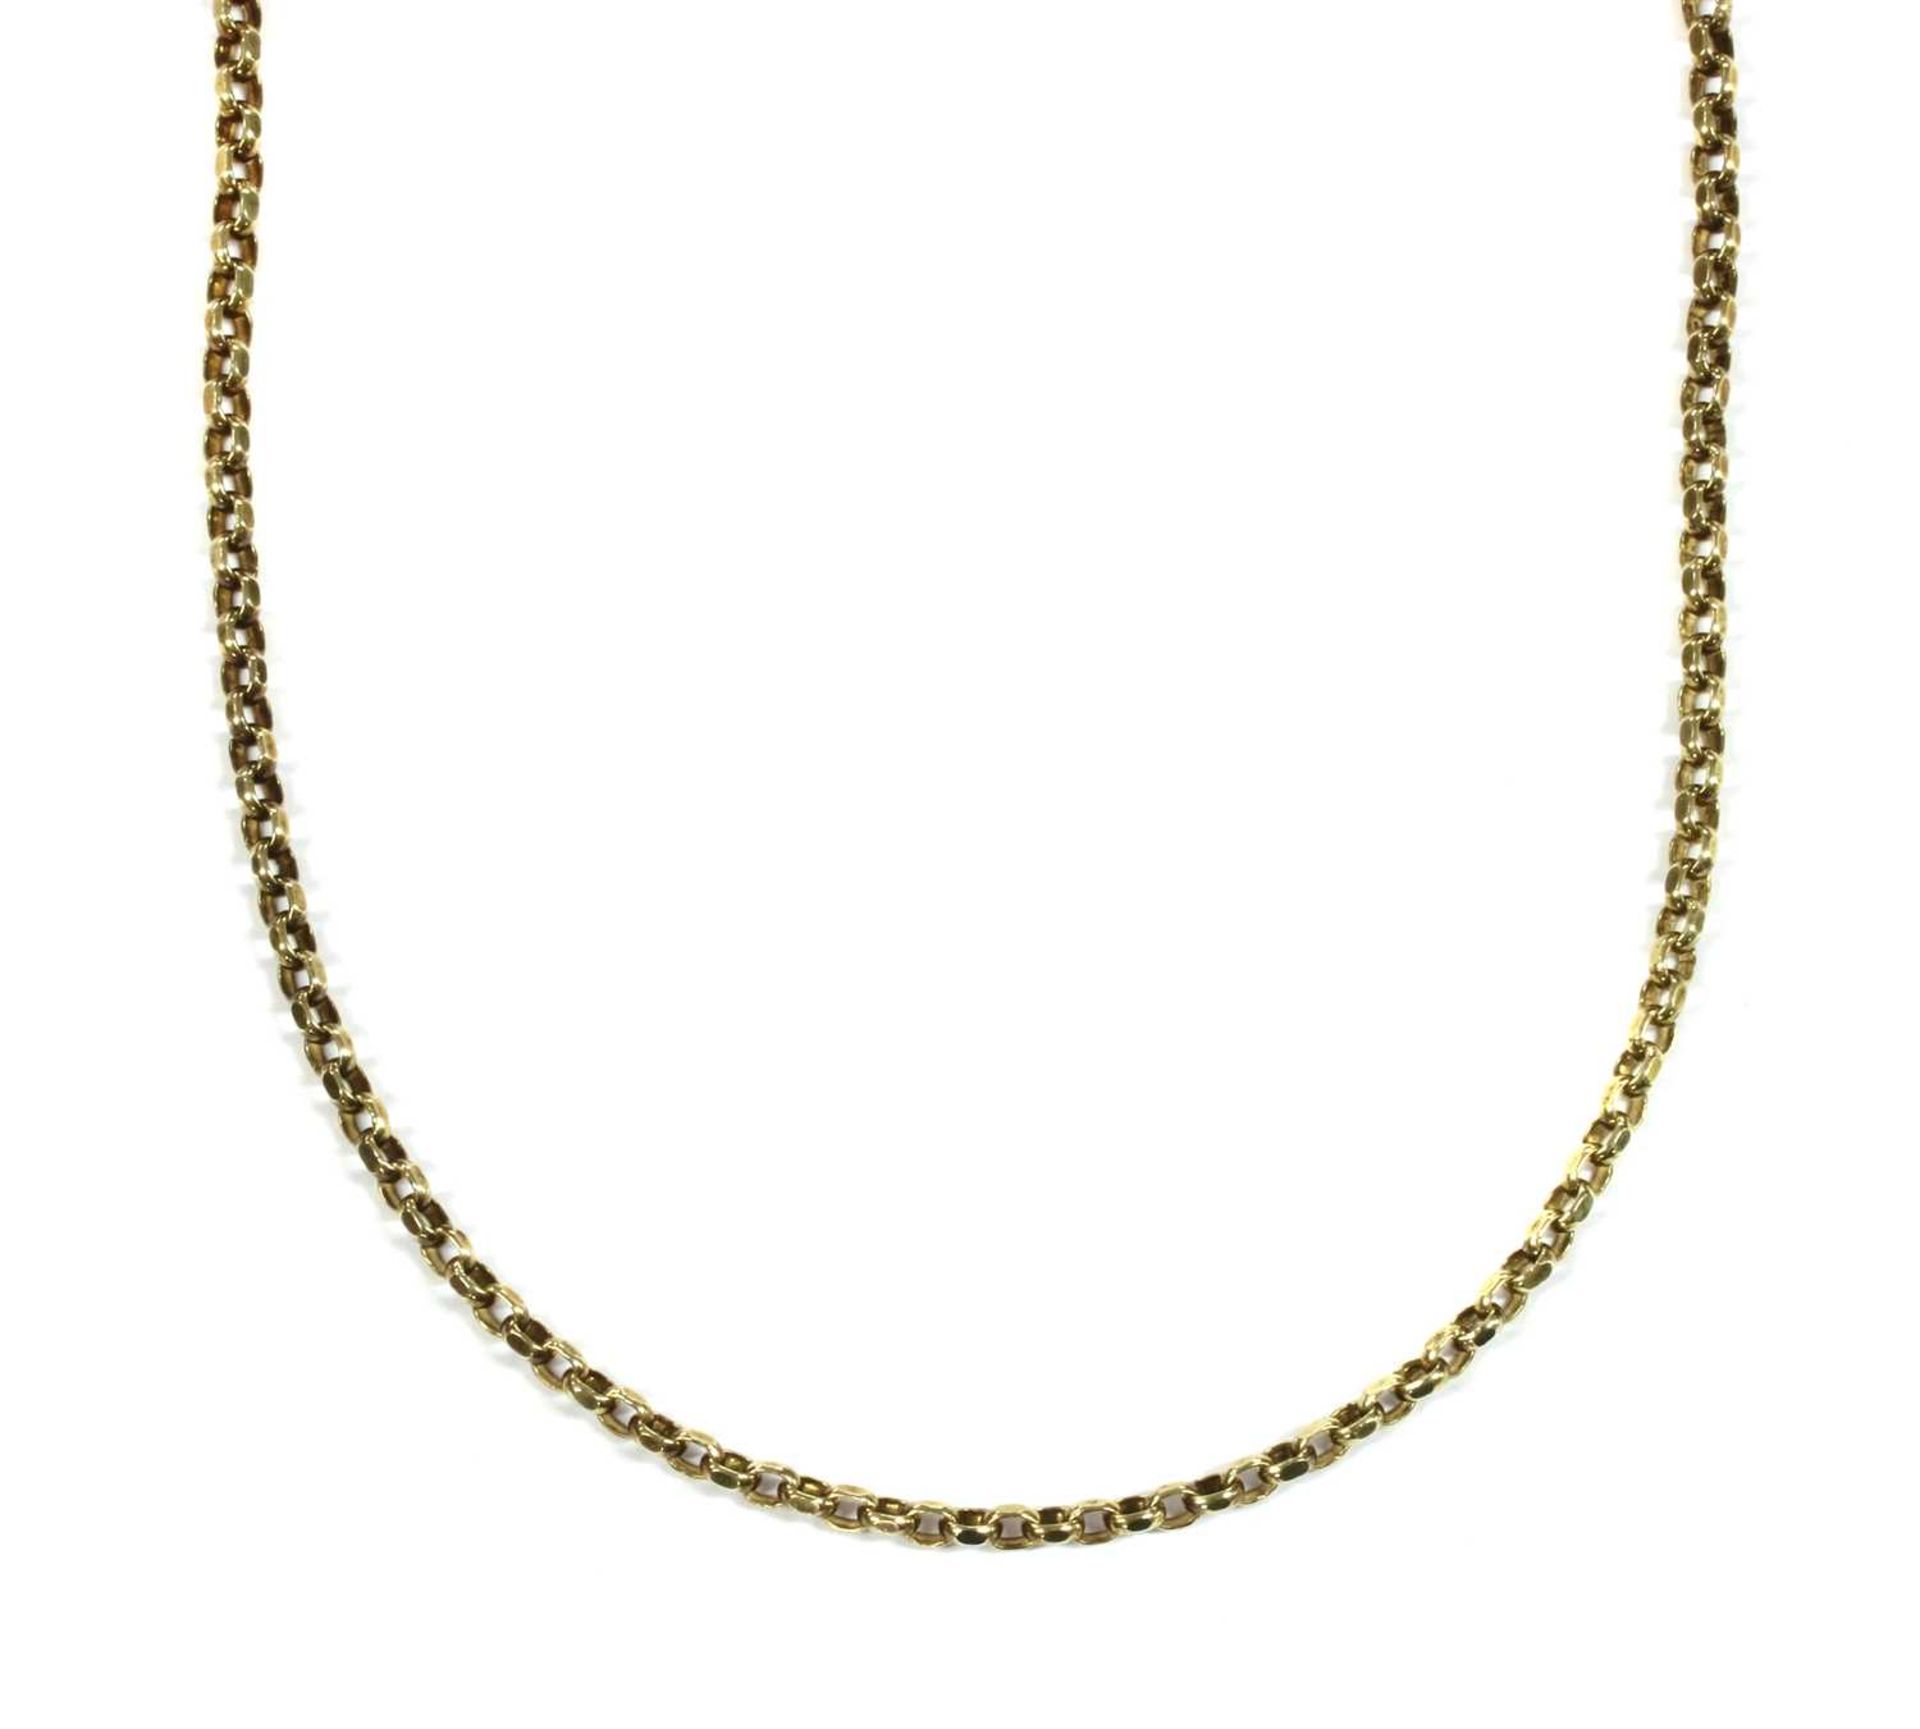 A 9ct gold belcher chain,